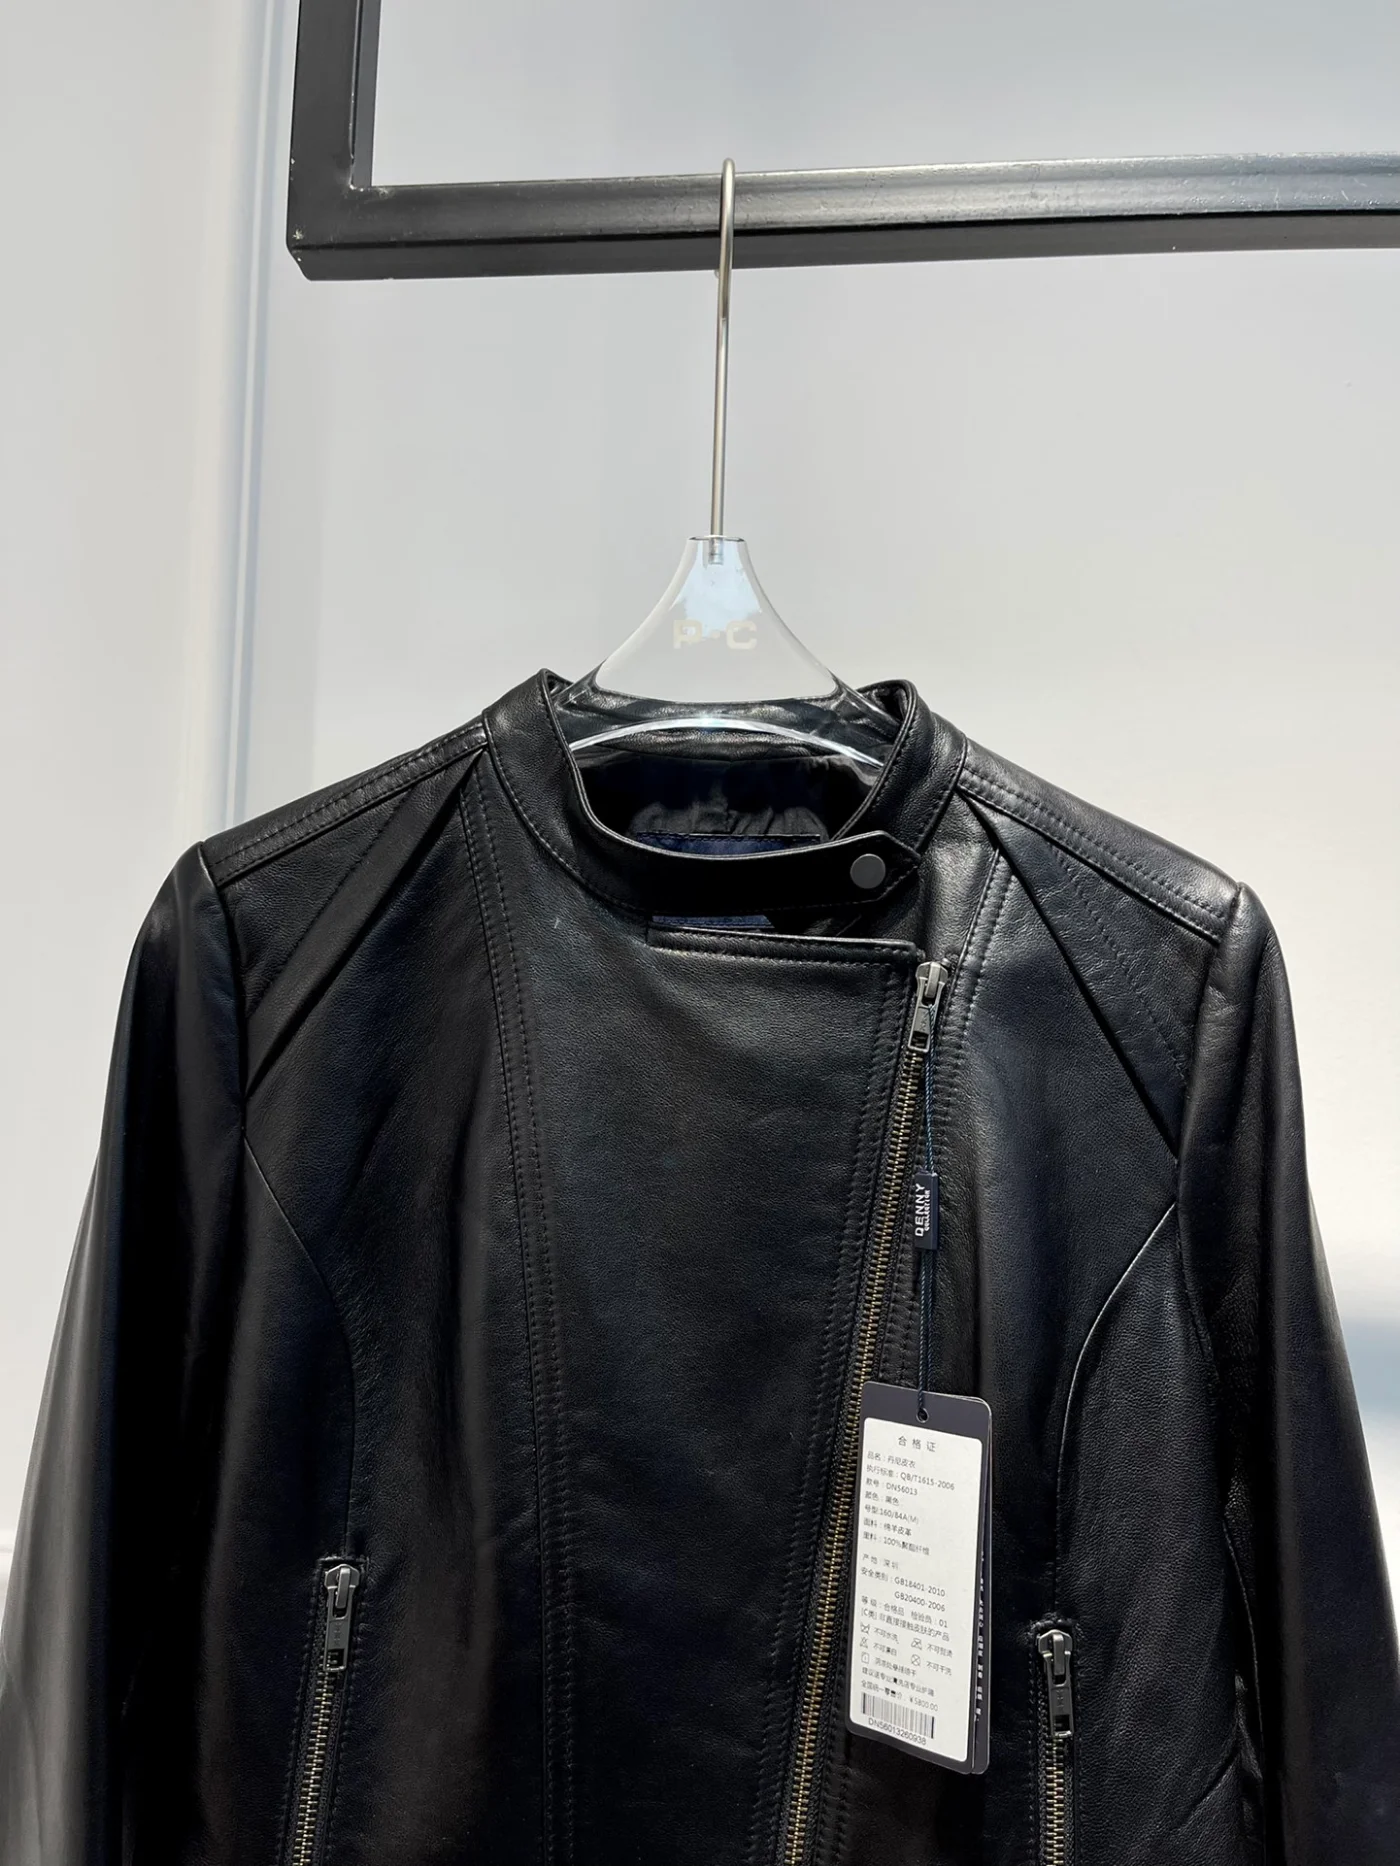 2022 Autumn Hot Sale Wool Genuine Leather Women Fashion Jacket Handsome Motorcycle Style Black Coat Irregular Zipper Design enlarge